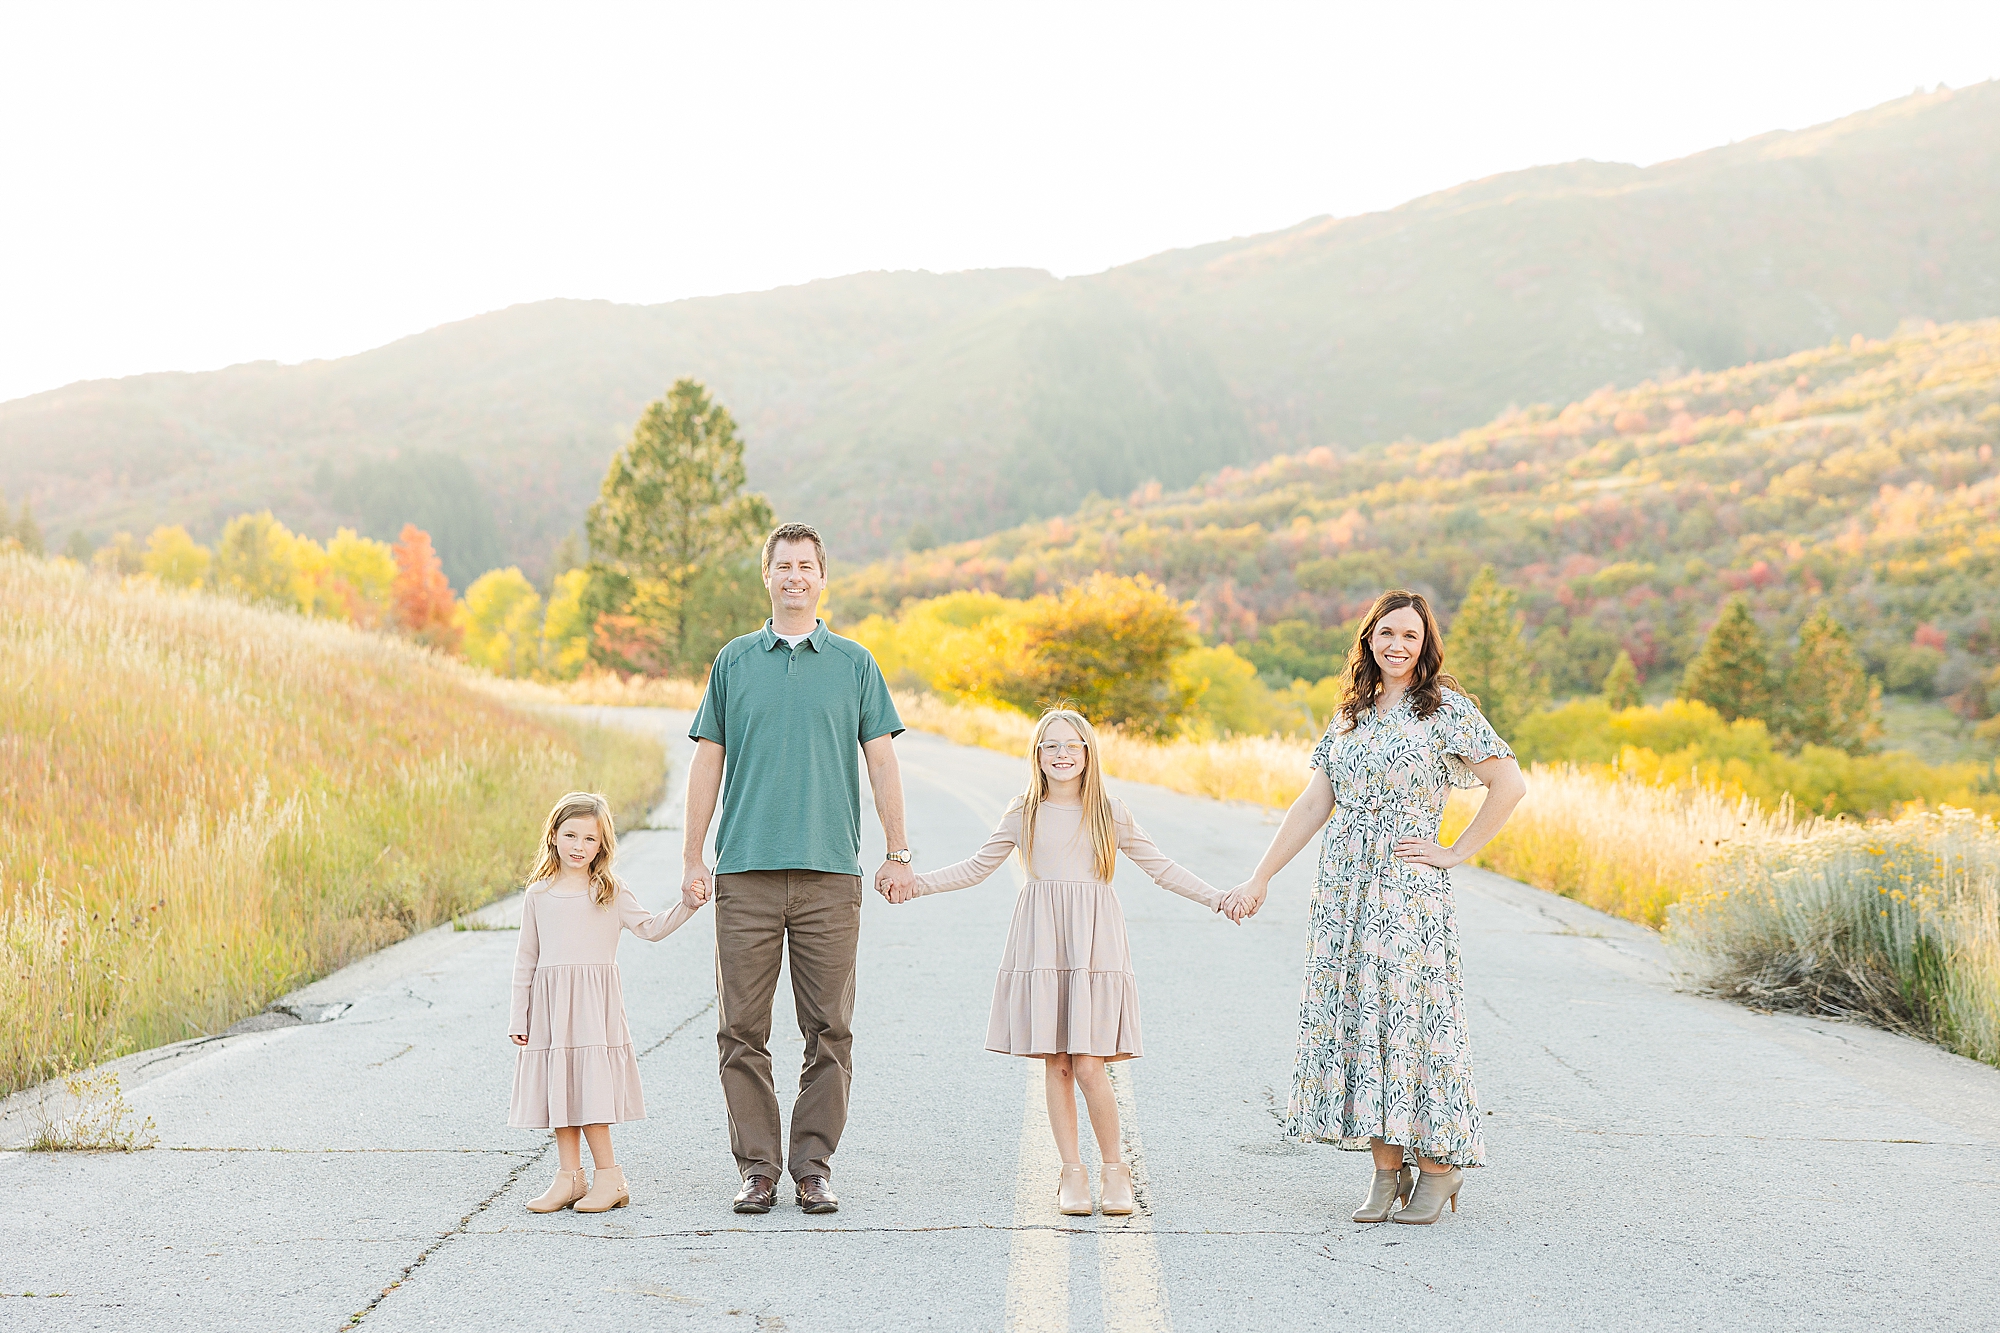 Vibrant fall foliage surrounds a loving family at Snow Basin.